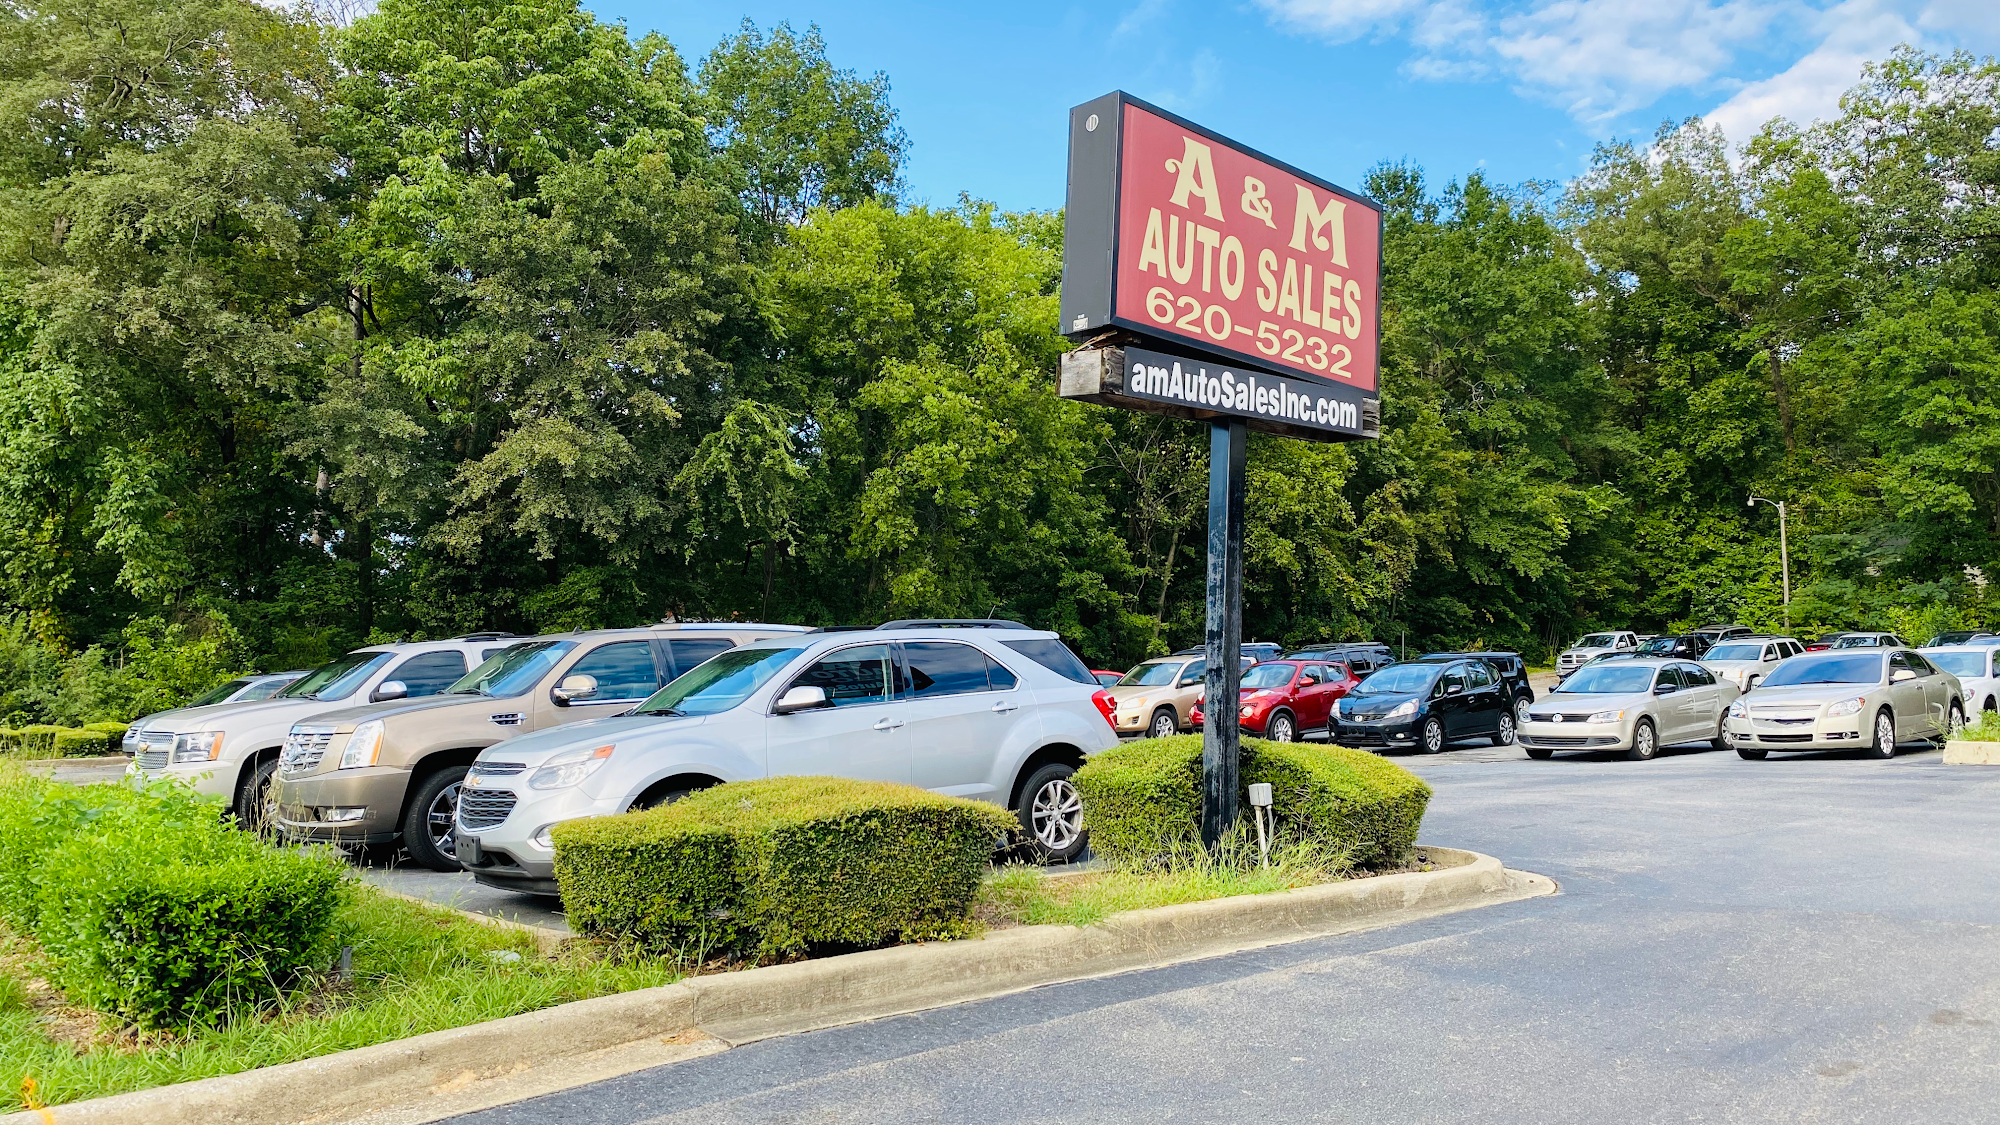 A & M Auto Sales